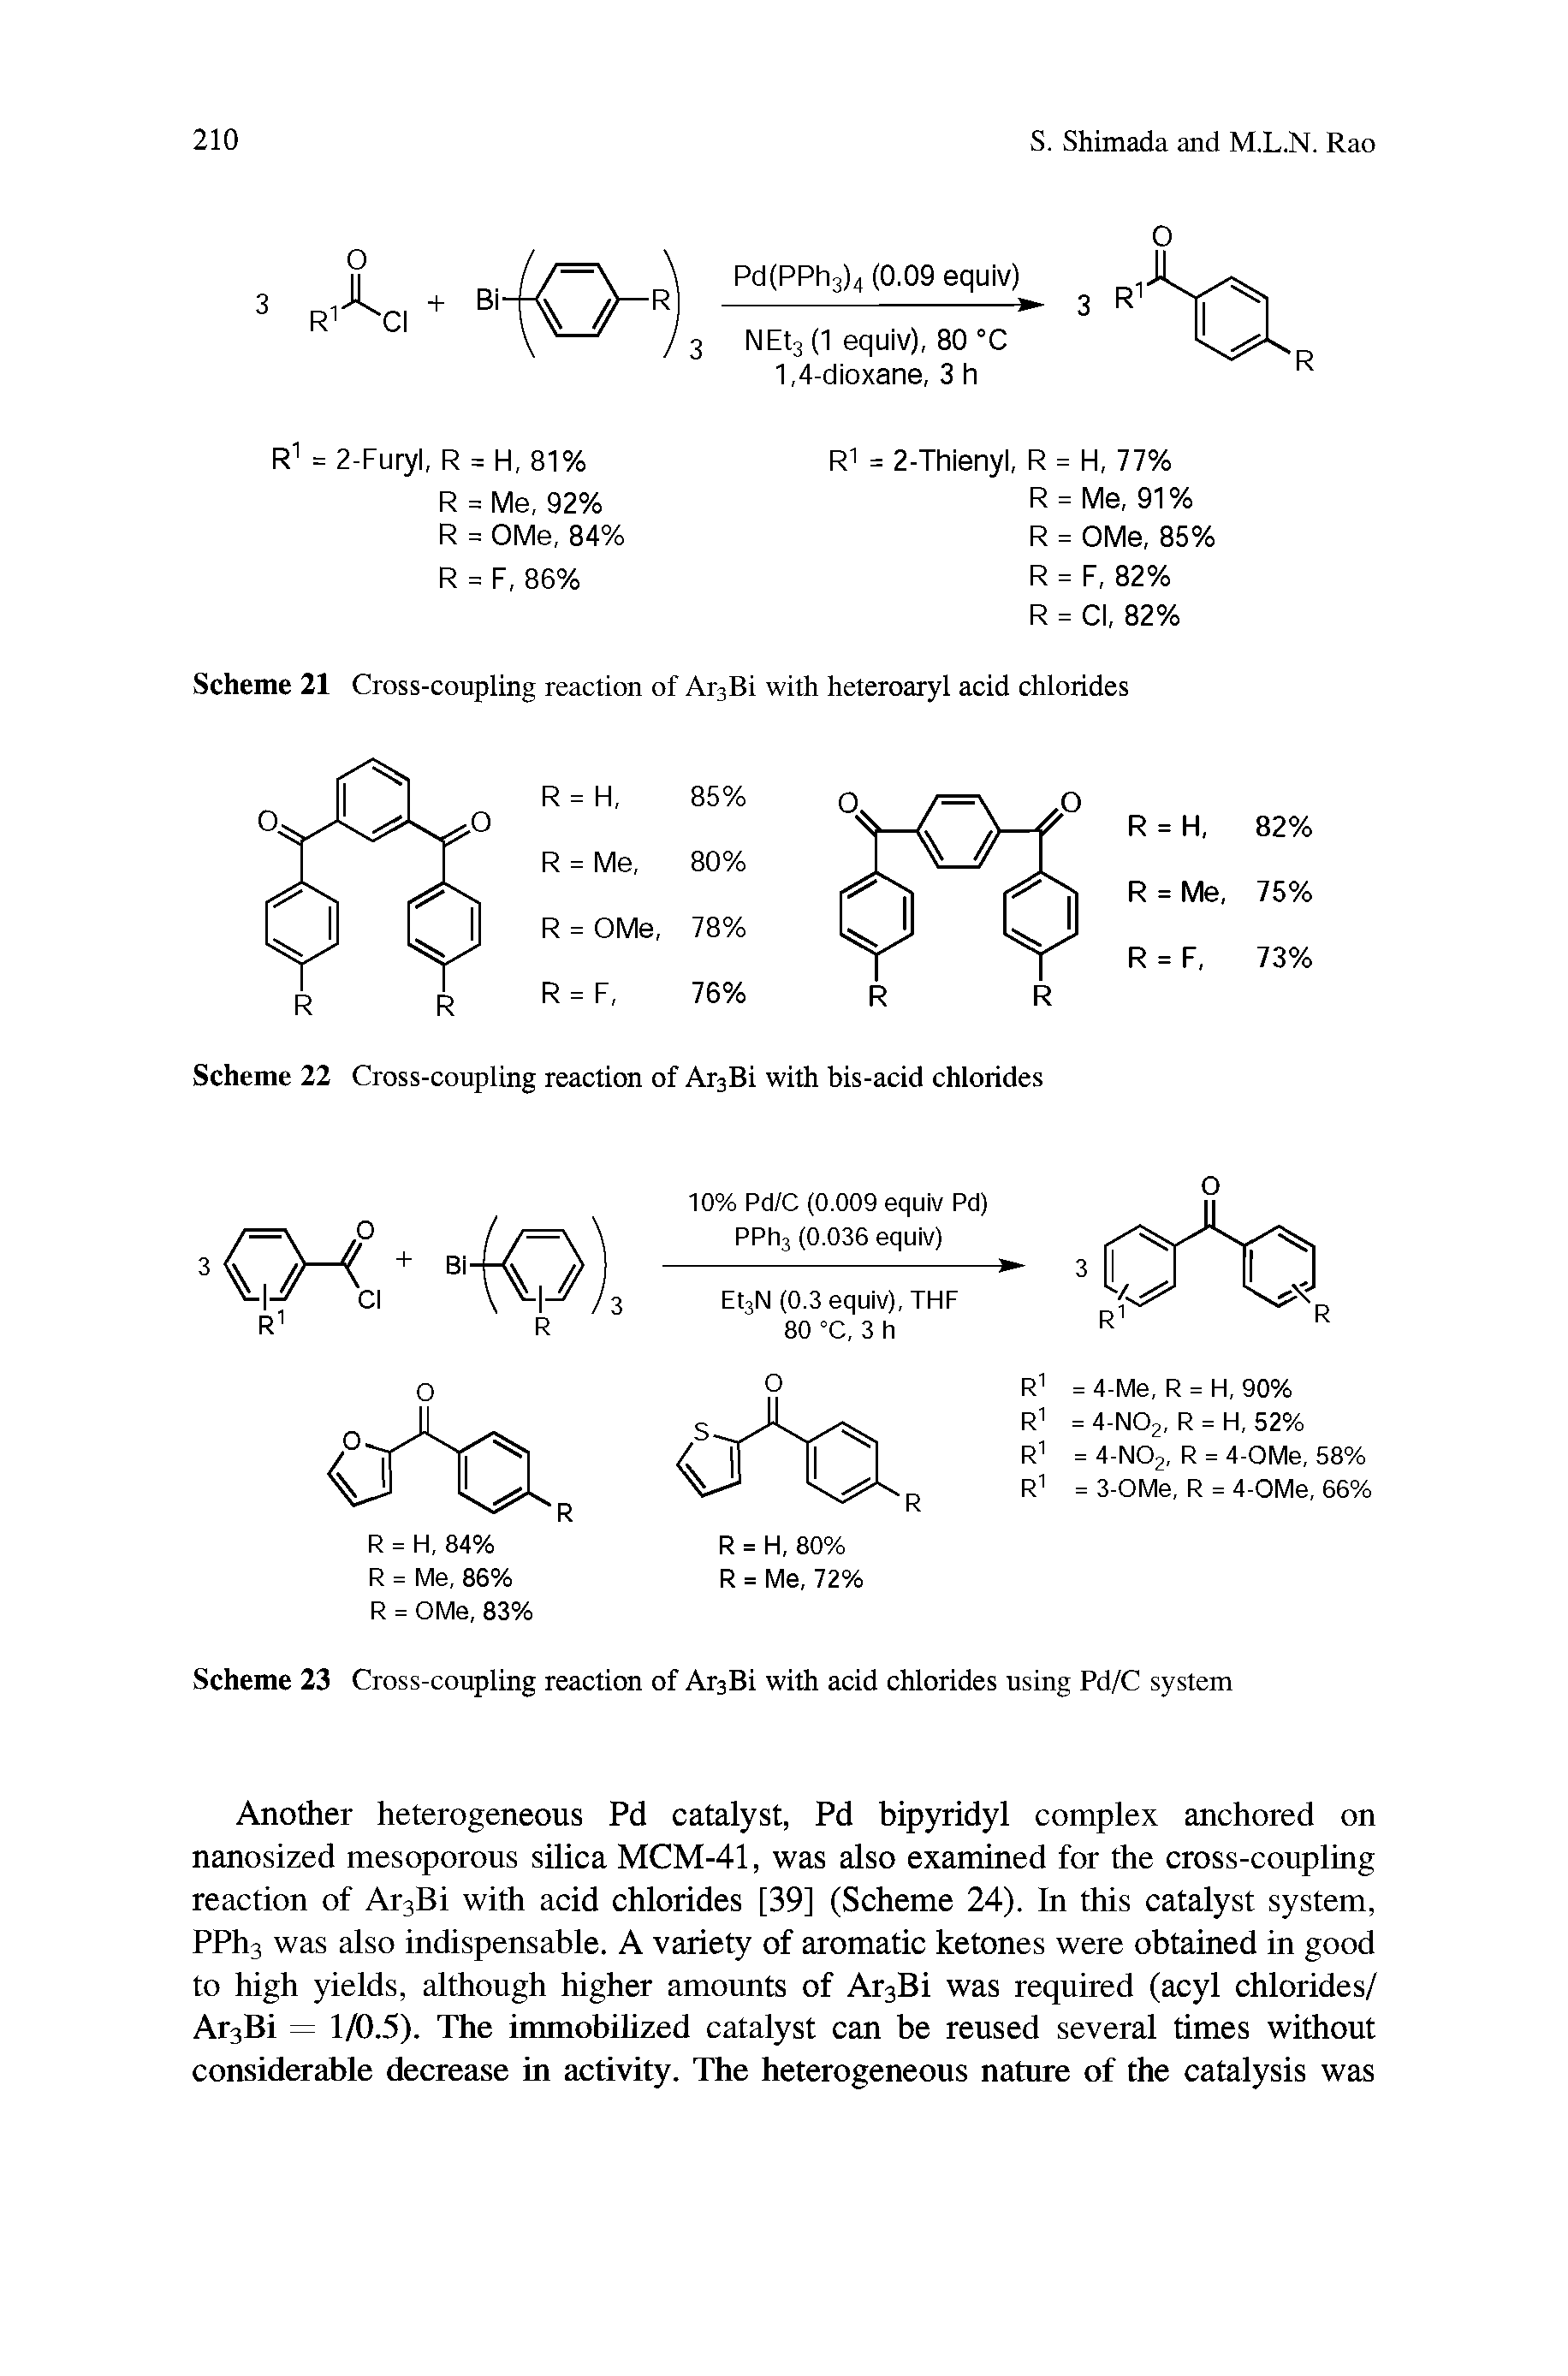 Scheme 22 Cross-coupling reaction of Ar3Bi with bis-acid chlorides...